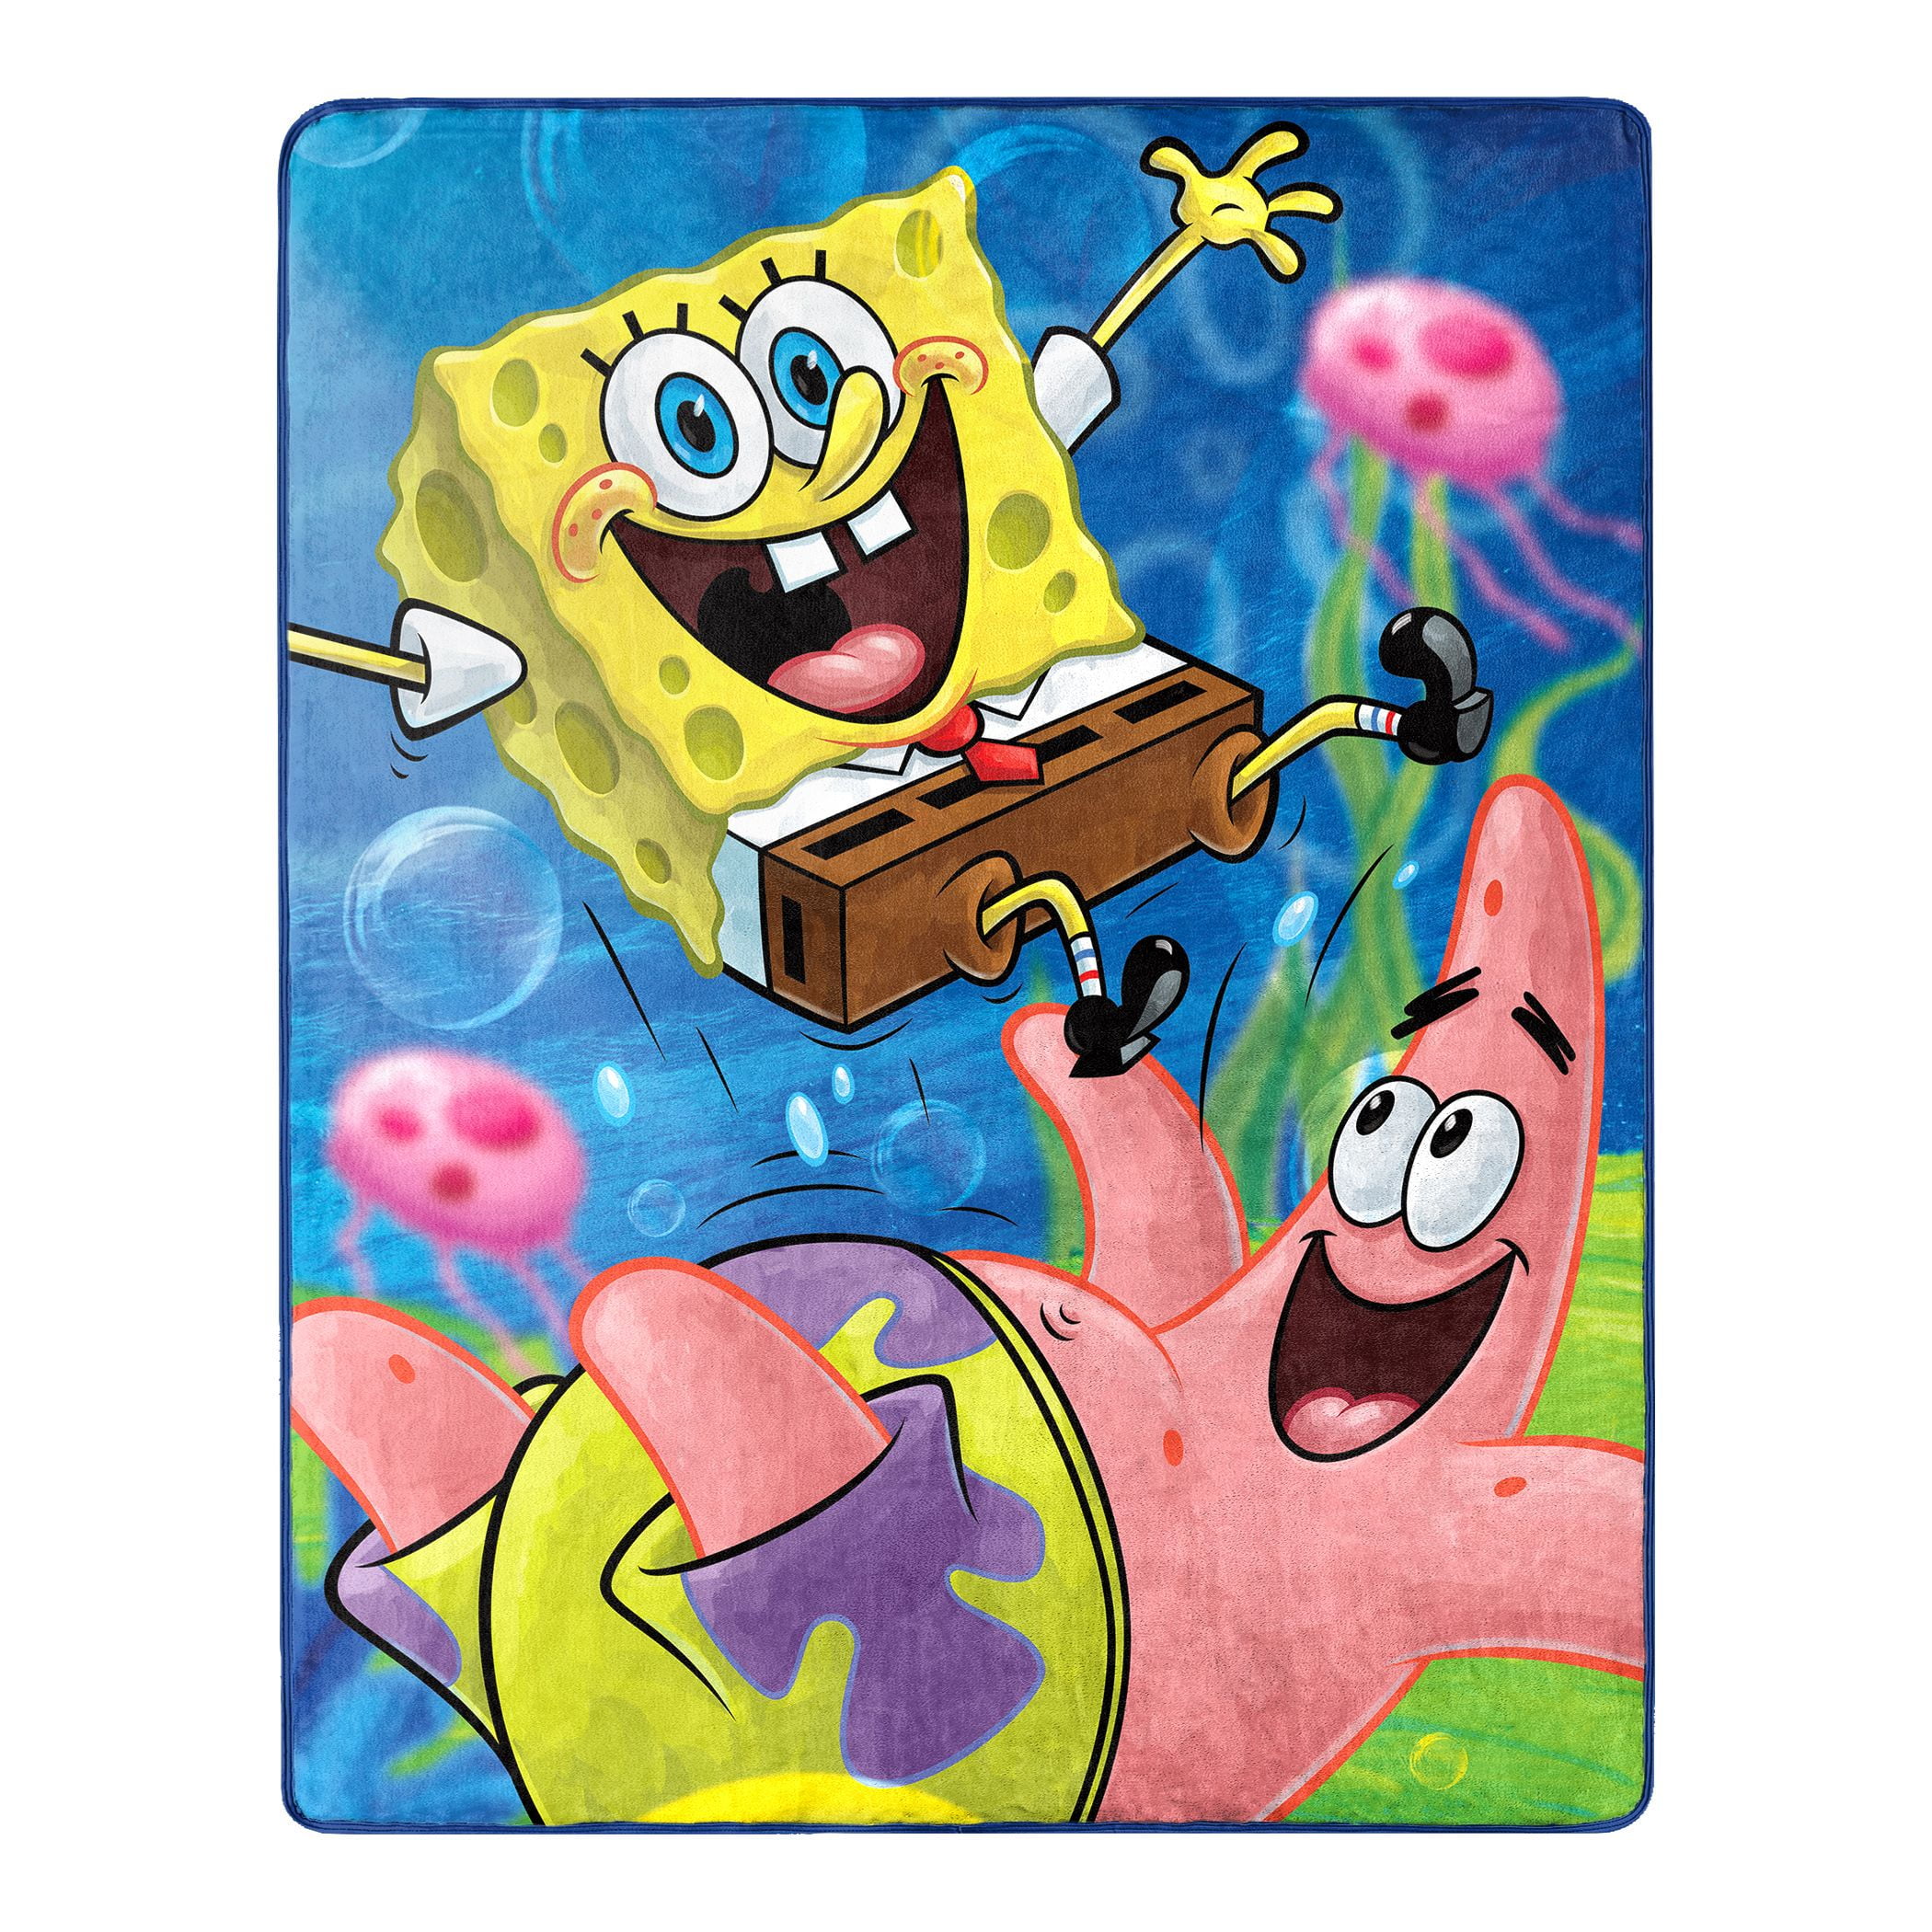 Spongebob Squarepants 50-50 Design Large Lightweight 50x60 Fleece Throw Blanket 